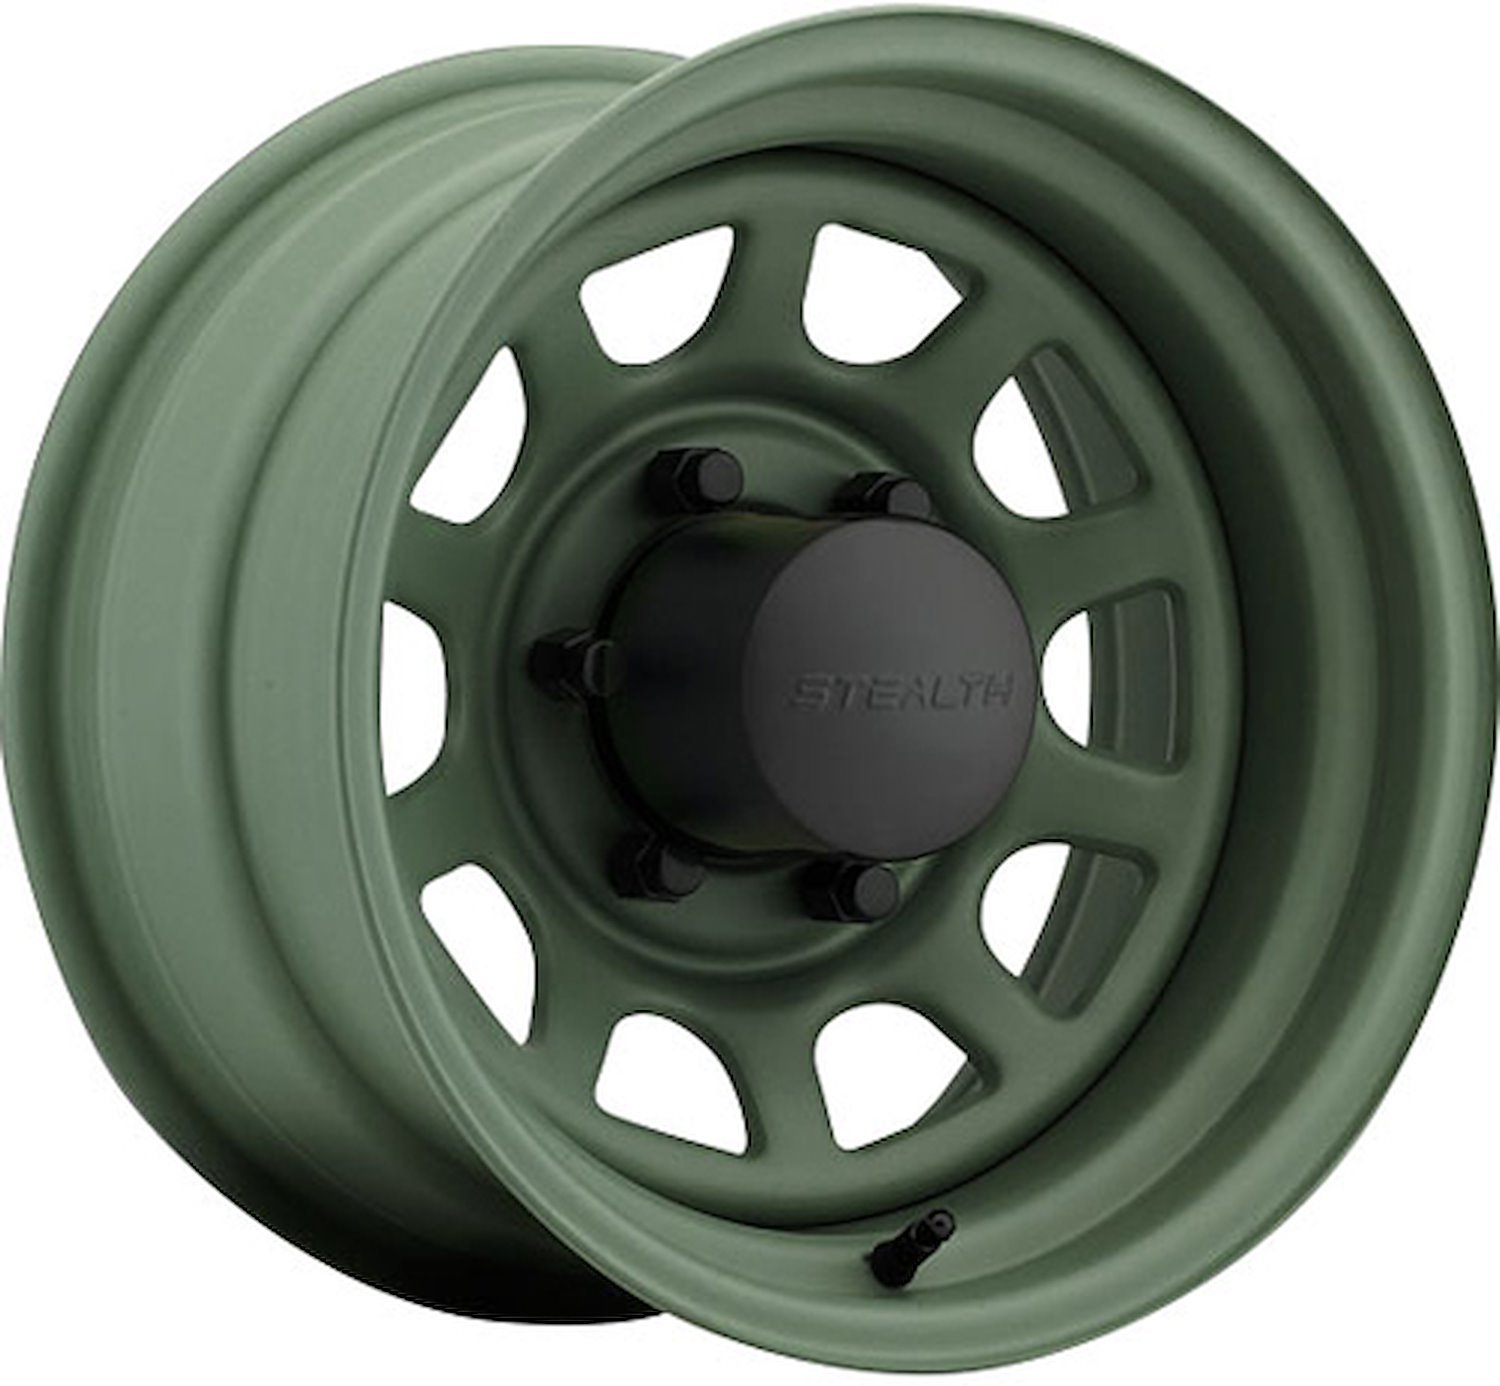 Stealth Camo Green Daytona Wheel (Series 804) Size: 15" x 12"